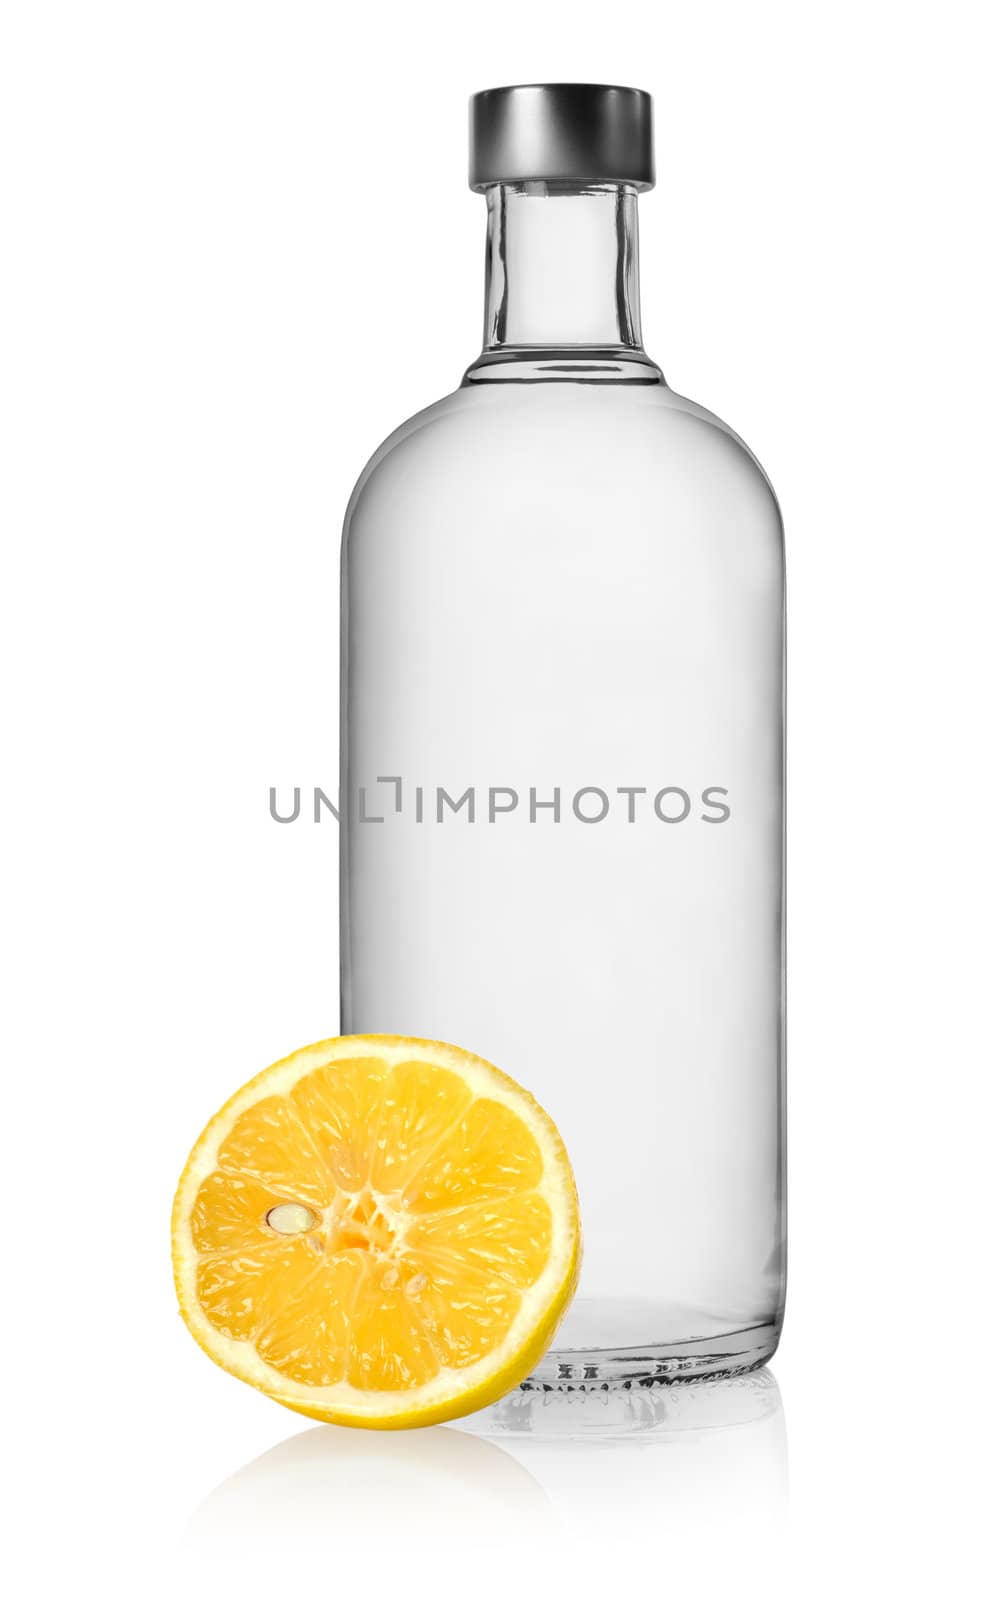 Bottle of vodka and lemon isolated on a white background